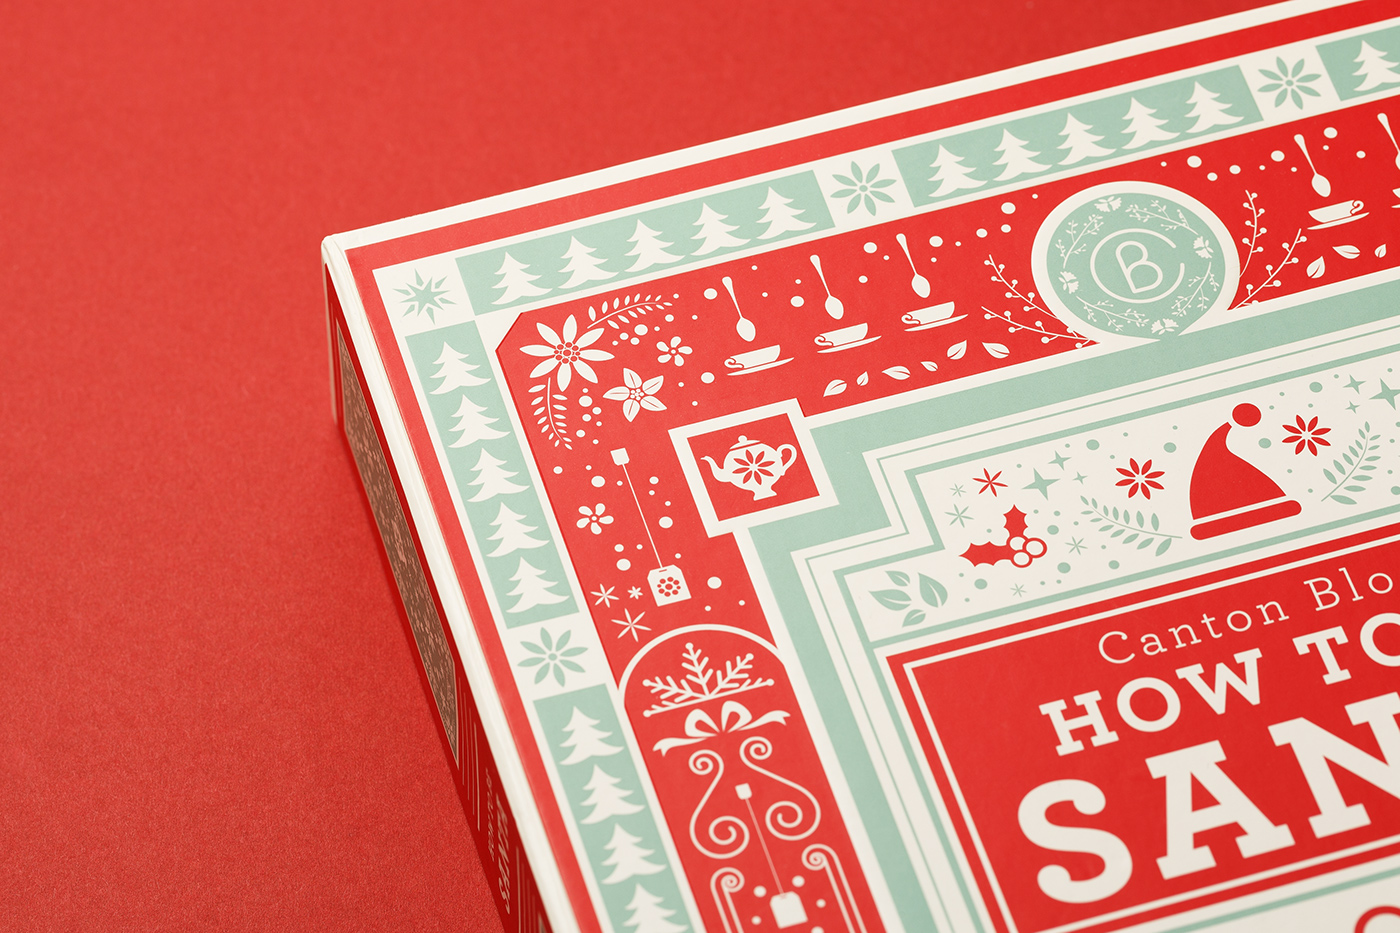 Christmas tea red green deco book box santa icons graphic